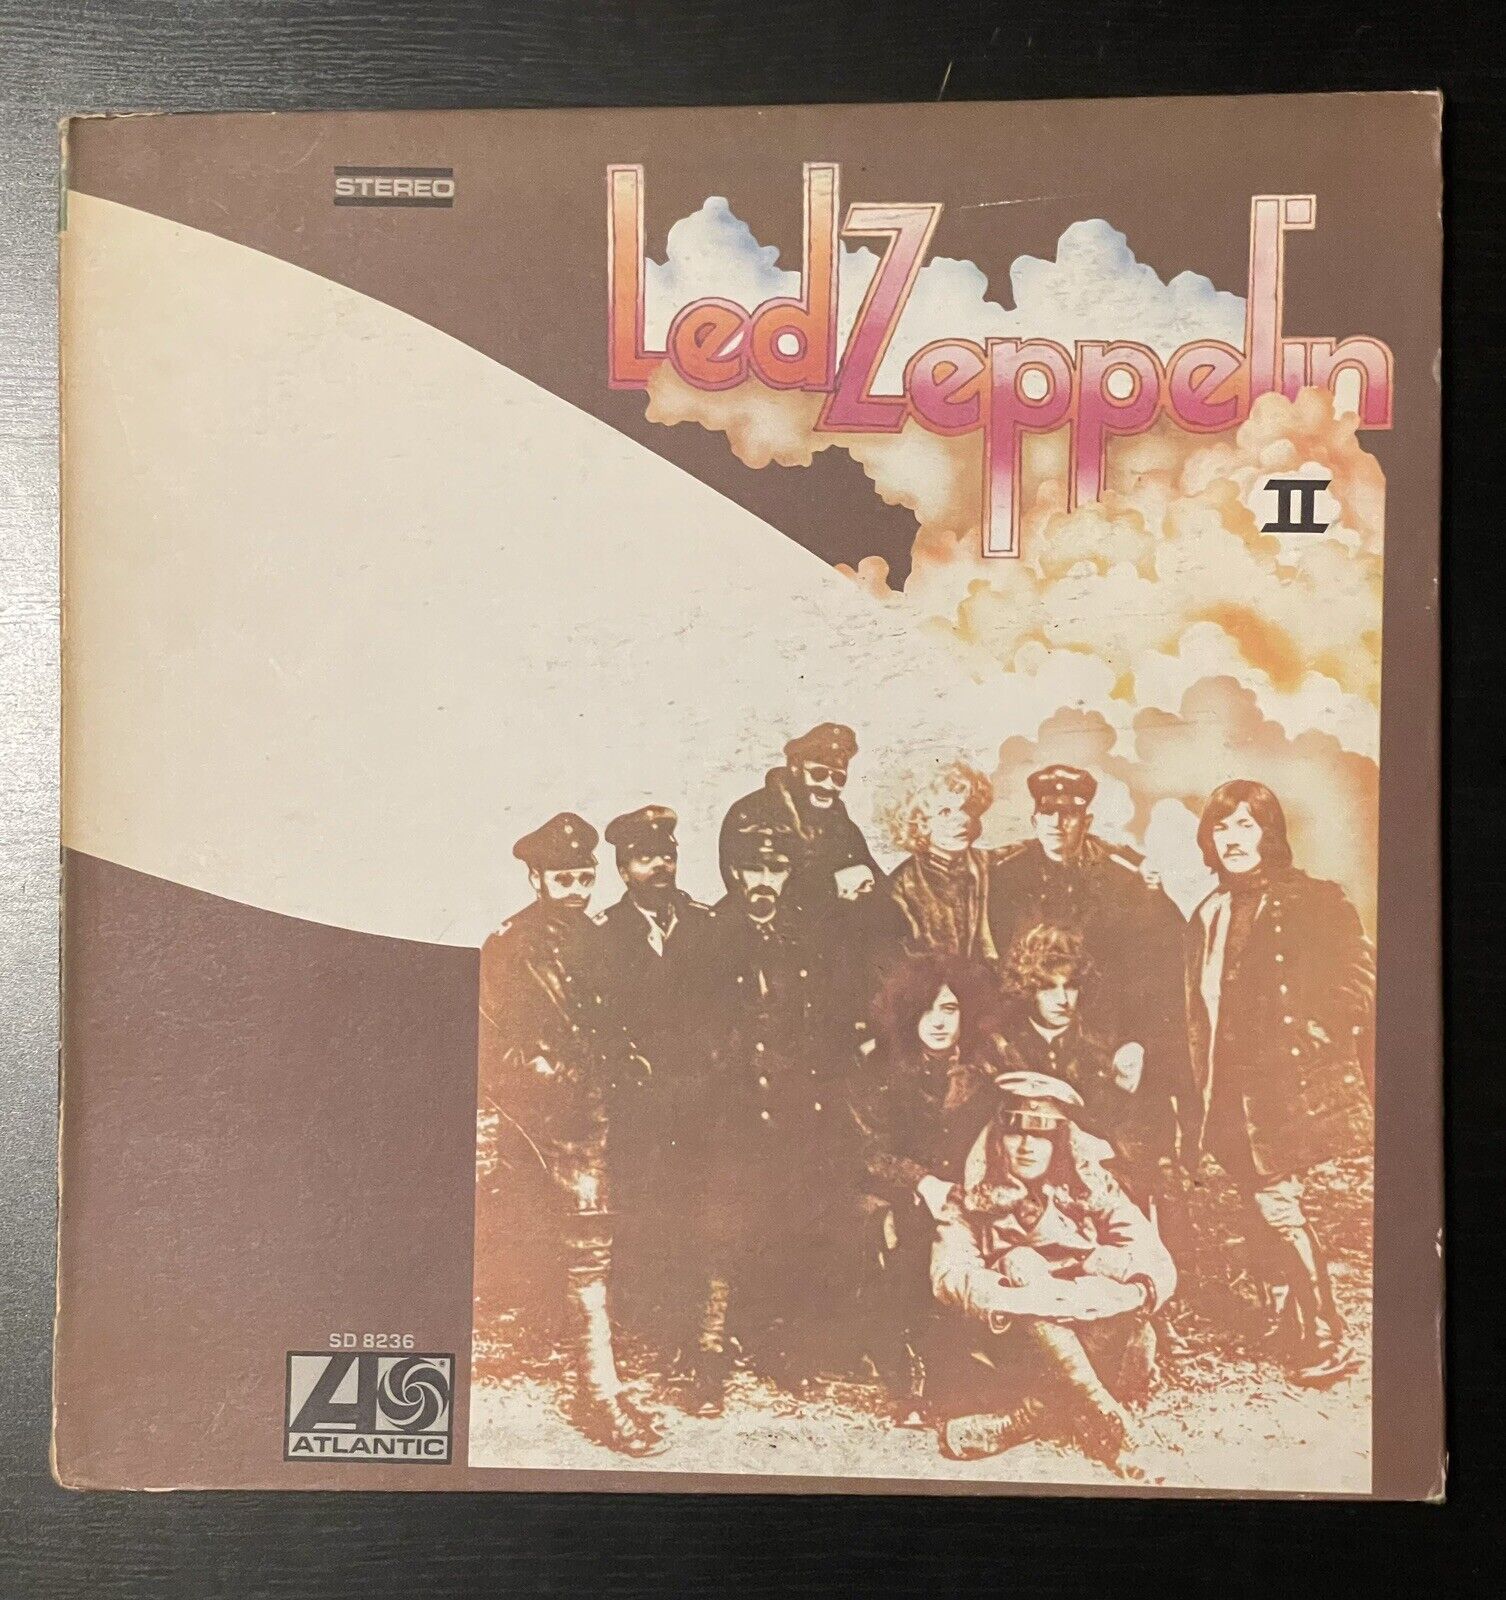 Led Zeppelin - II - SD-8236 MGM Pressing - Rare Label Error - LP 1969 Atlantic